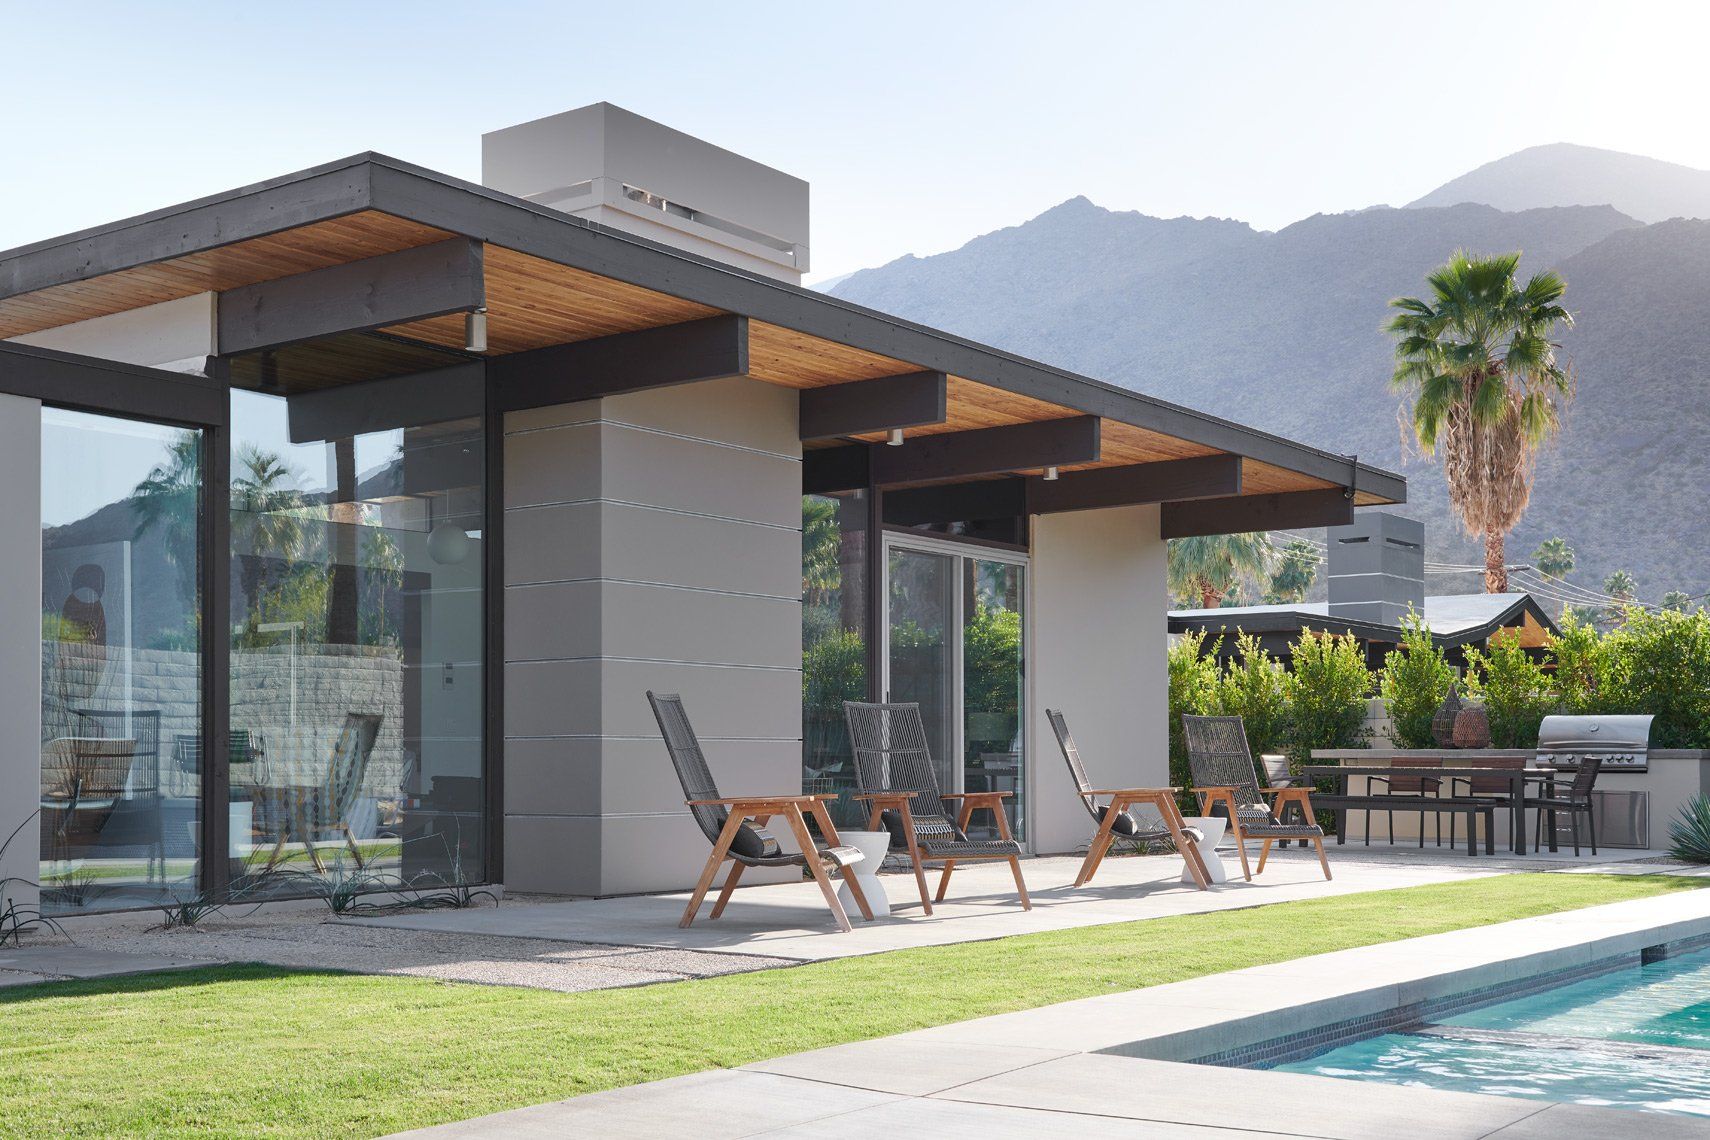 Exterior of a house in Palm Springs designed by Dakota DesignWorks